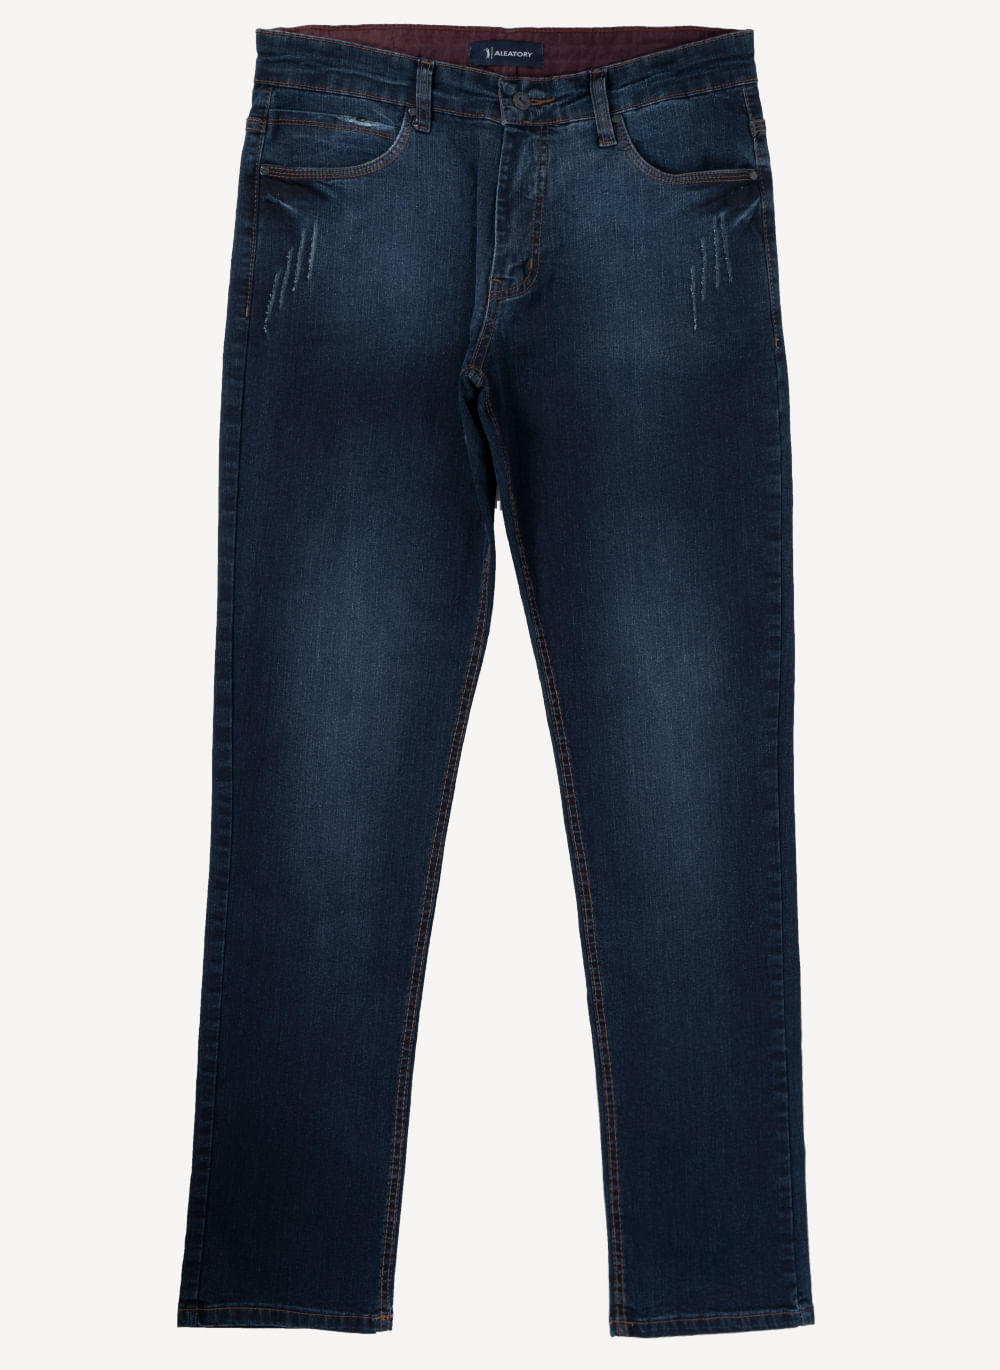 Calca-Jeans-Aleatory-Vogue-Azul-48